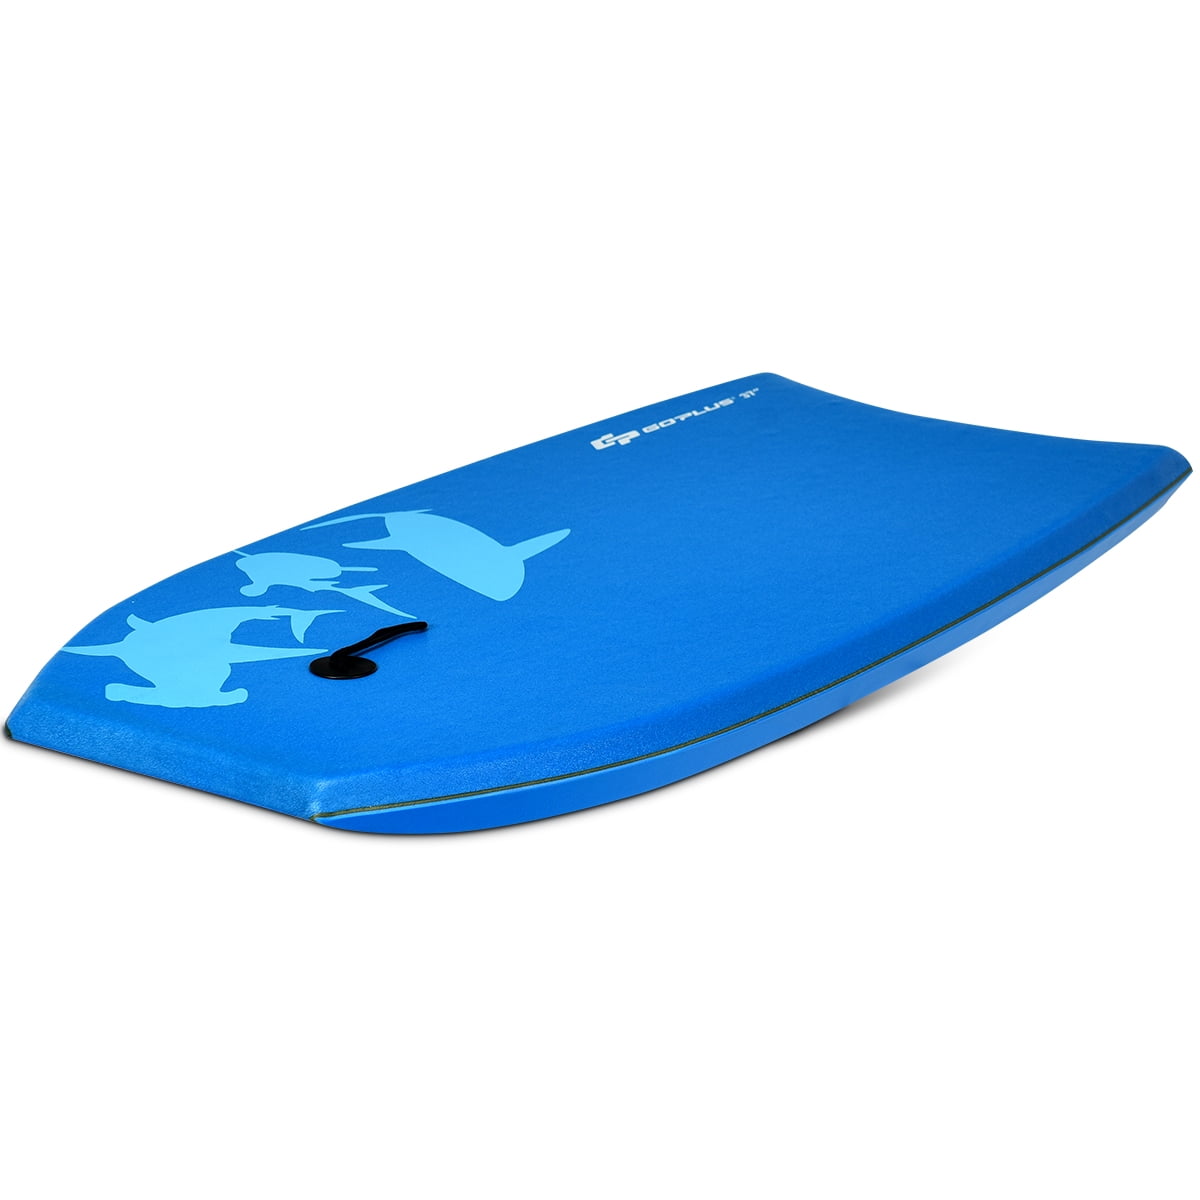 41" Super Surfing Core Bodyboard W/Leash IXPE Deck EPS Lightweight Starfish 